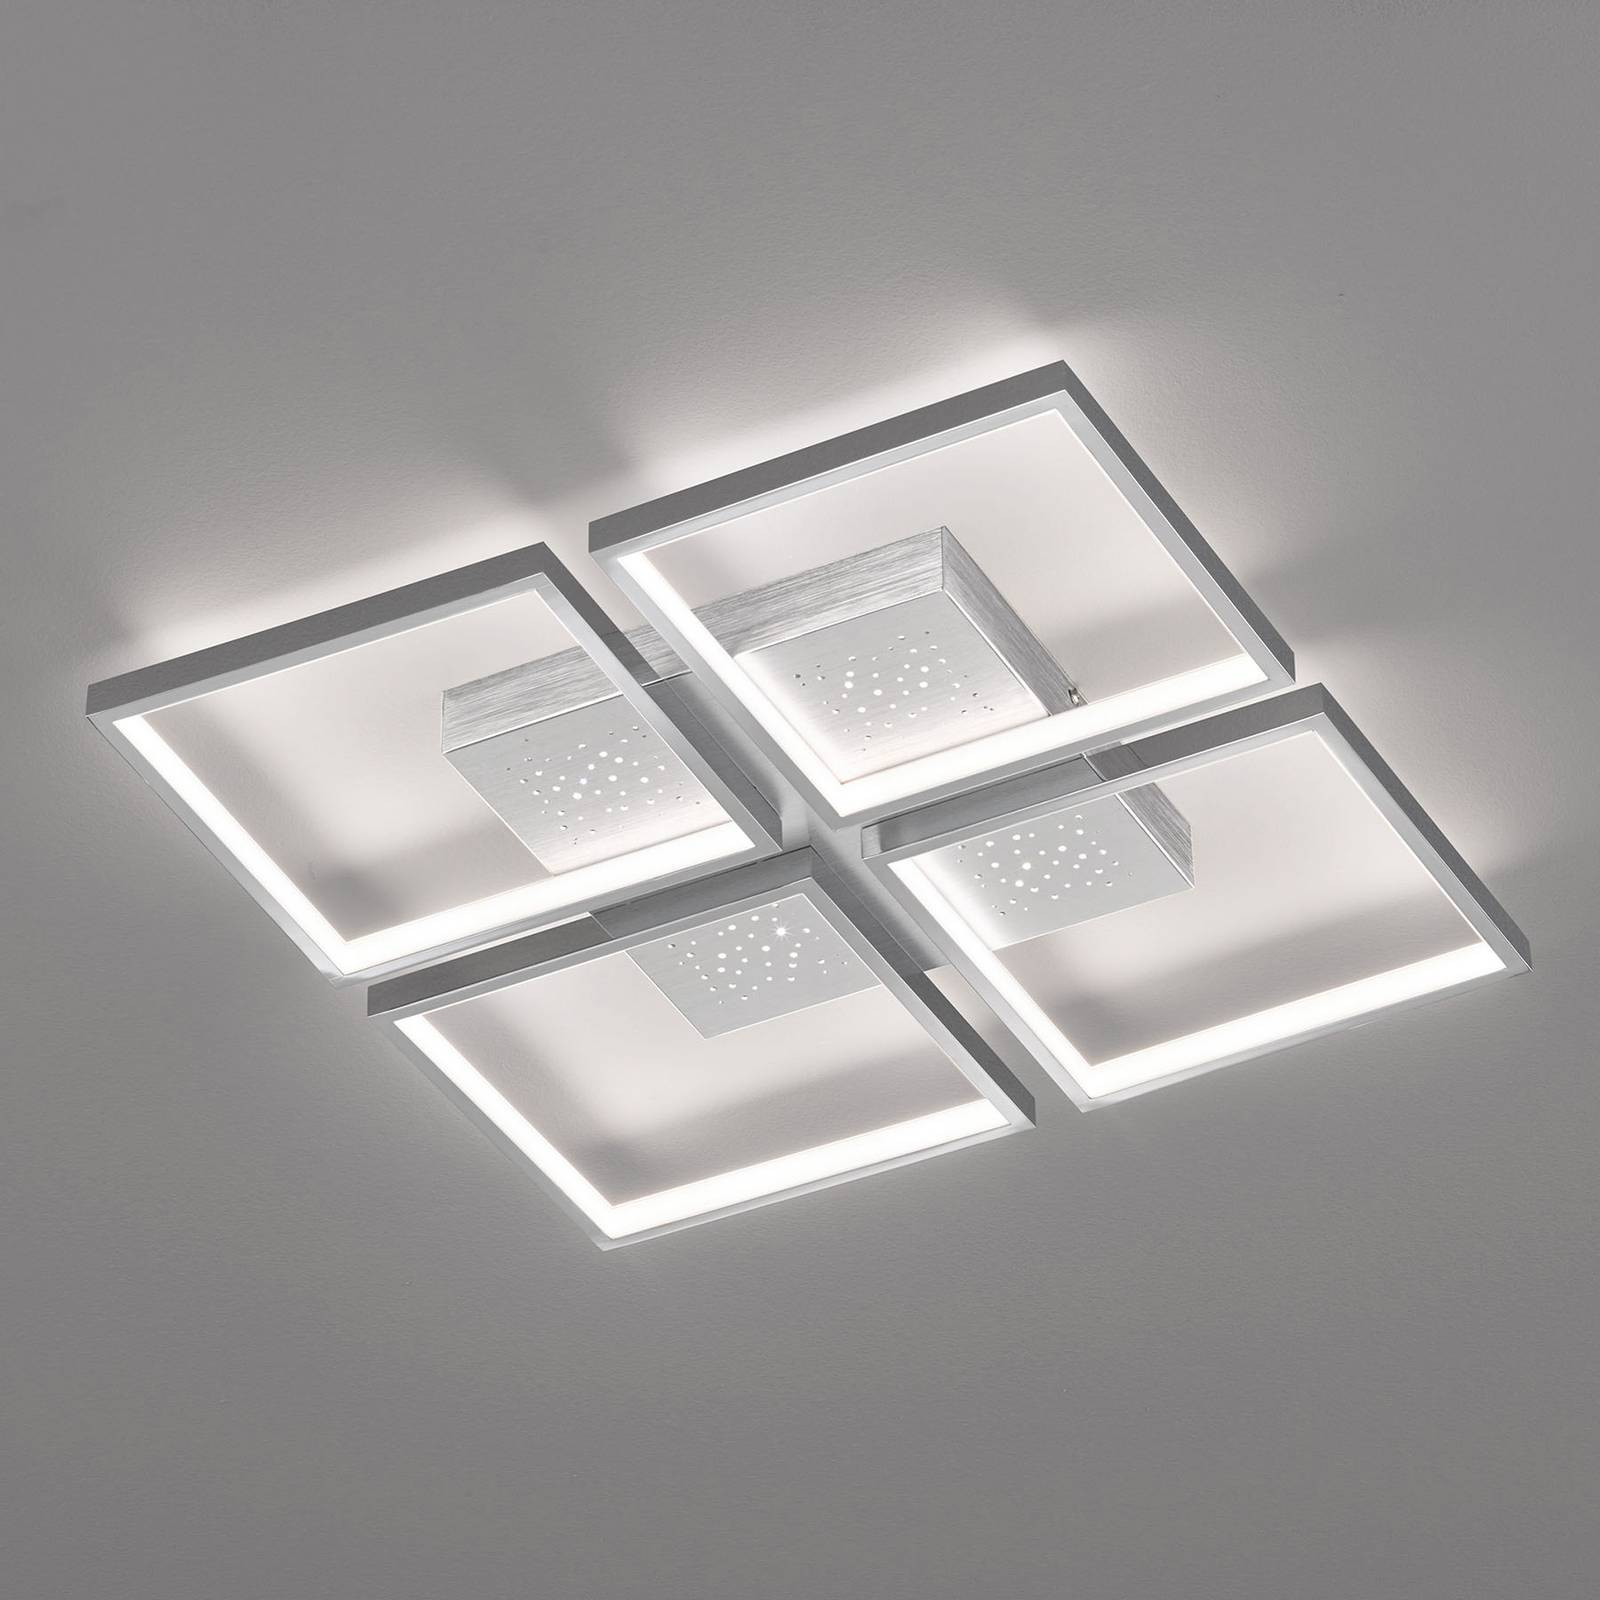 LED-kattovalaisin Pix, 4-lamppuinen, 54 x 54 cm